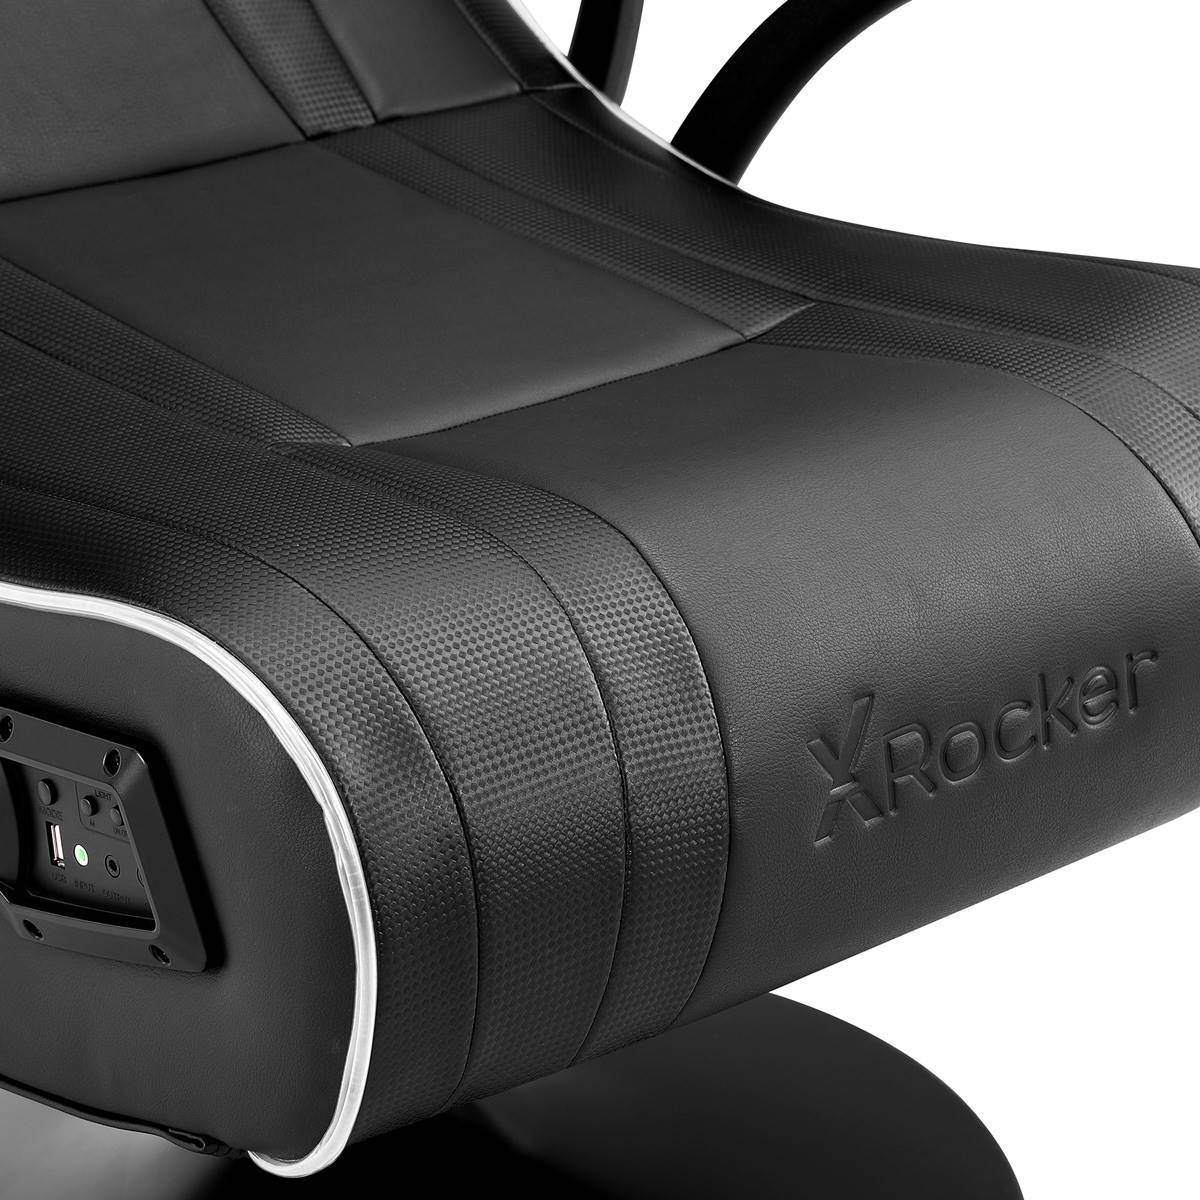 X Rocker CXR3 LED Audio Pedestal Gaming Chair W/ Subwoofer